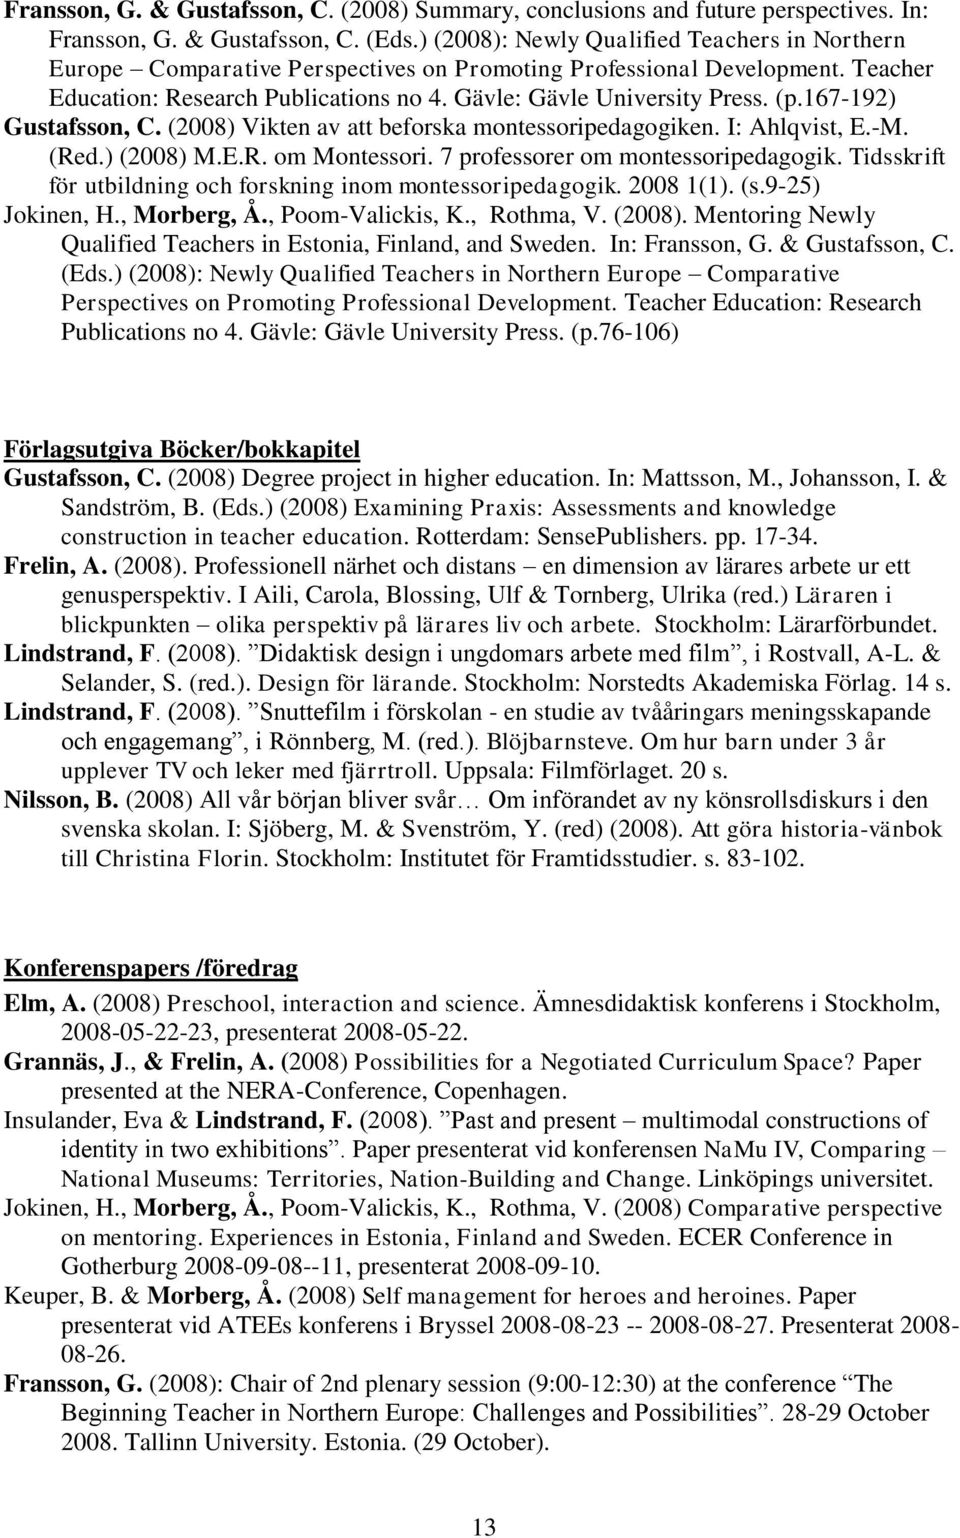 167-192) Gustafsson, C. (2008) Vikten av att beforska montessoripedagogiken. I: Ahlqvist, E.-M. (Red.) (2008) M.E.R. om Montessori. 7 professorer om montessoripedagogik.